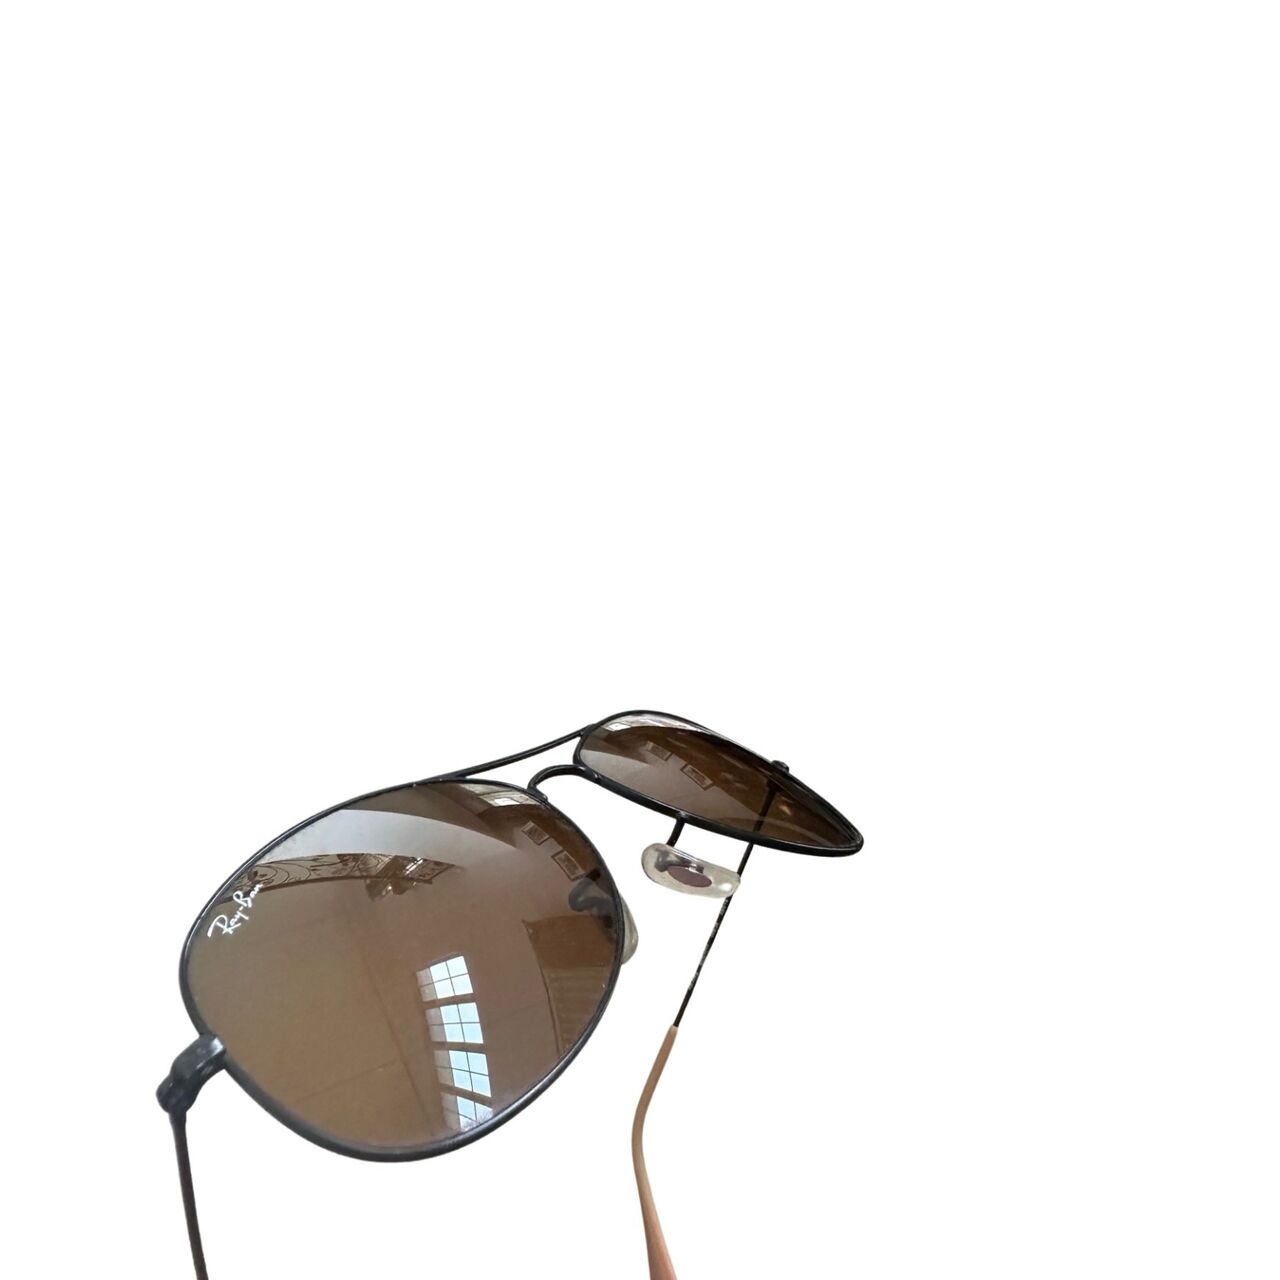 Ray-ban Brown Aviator Sunglasses